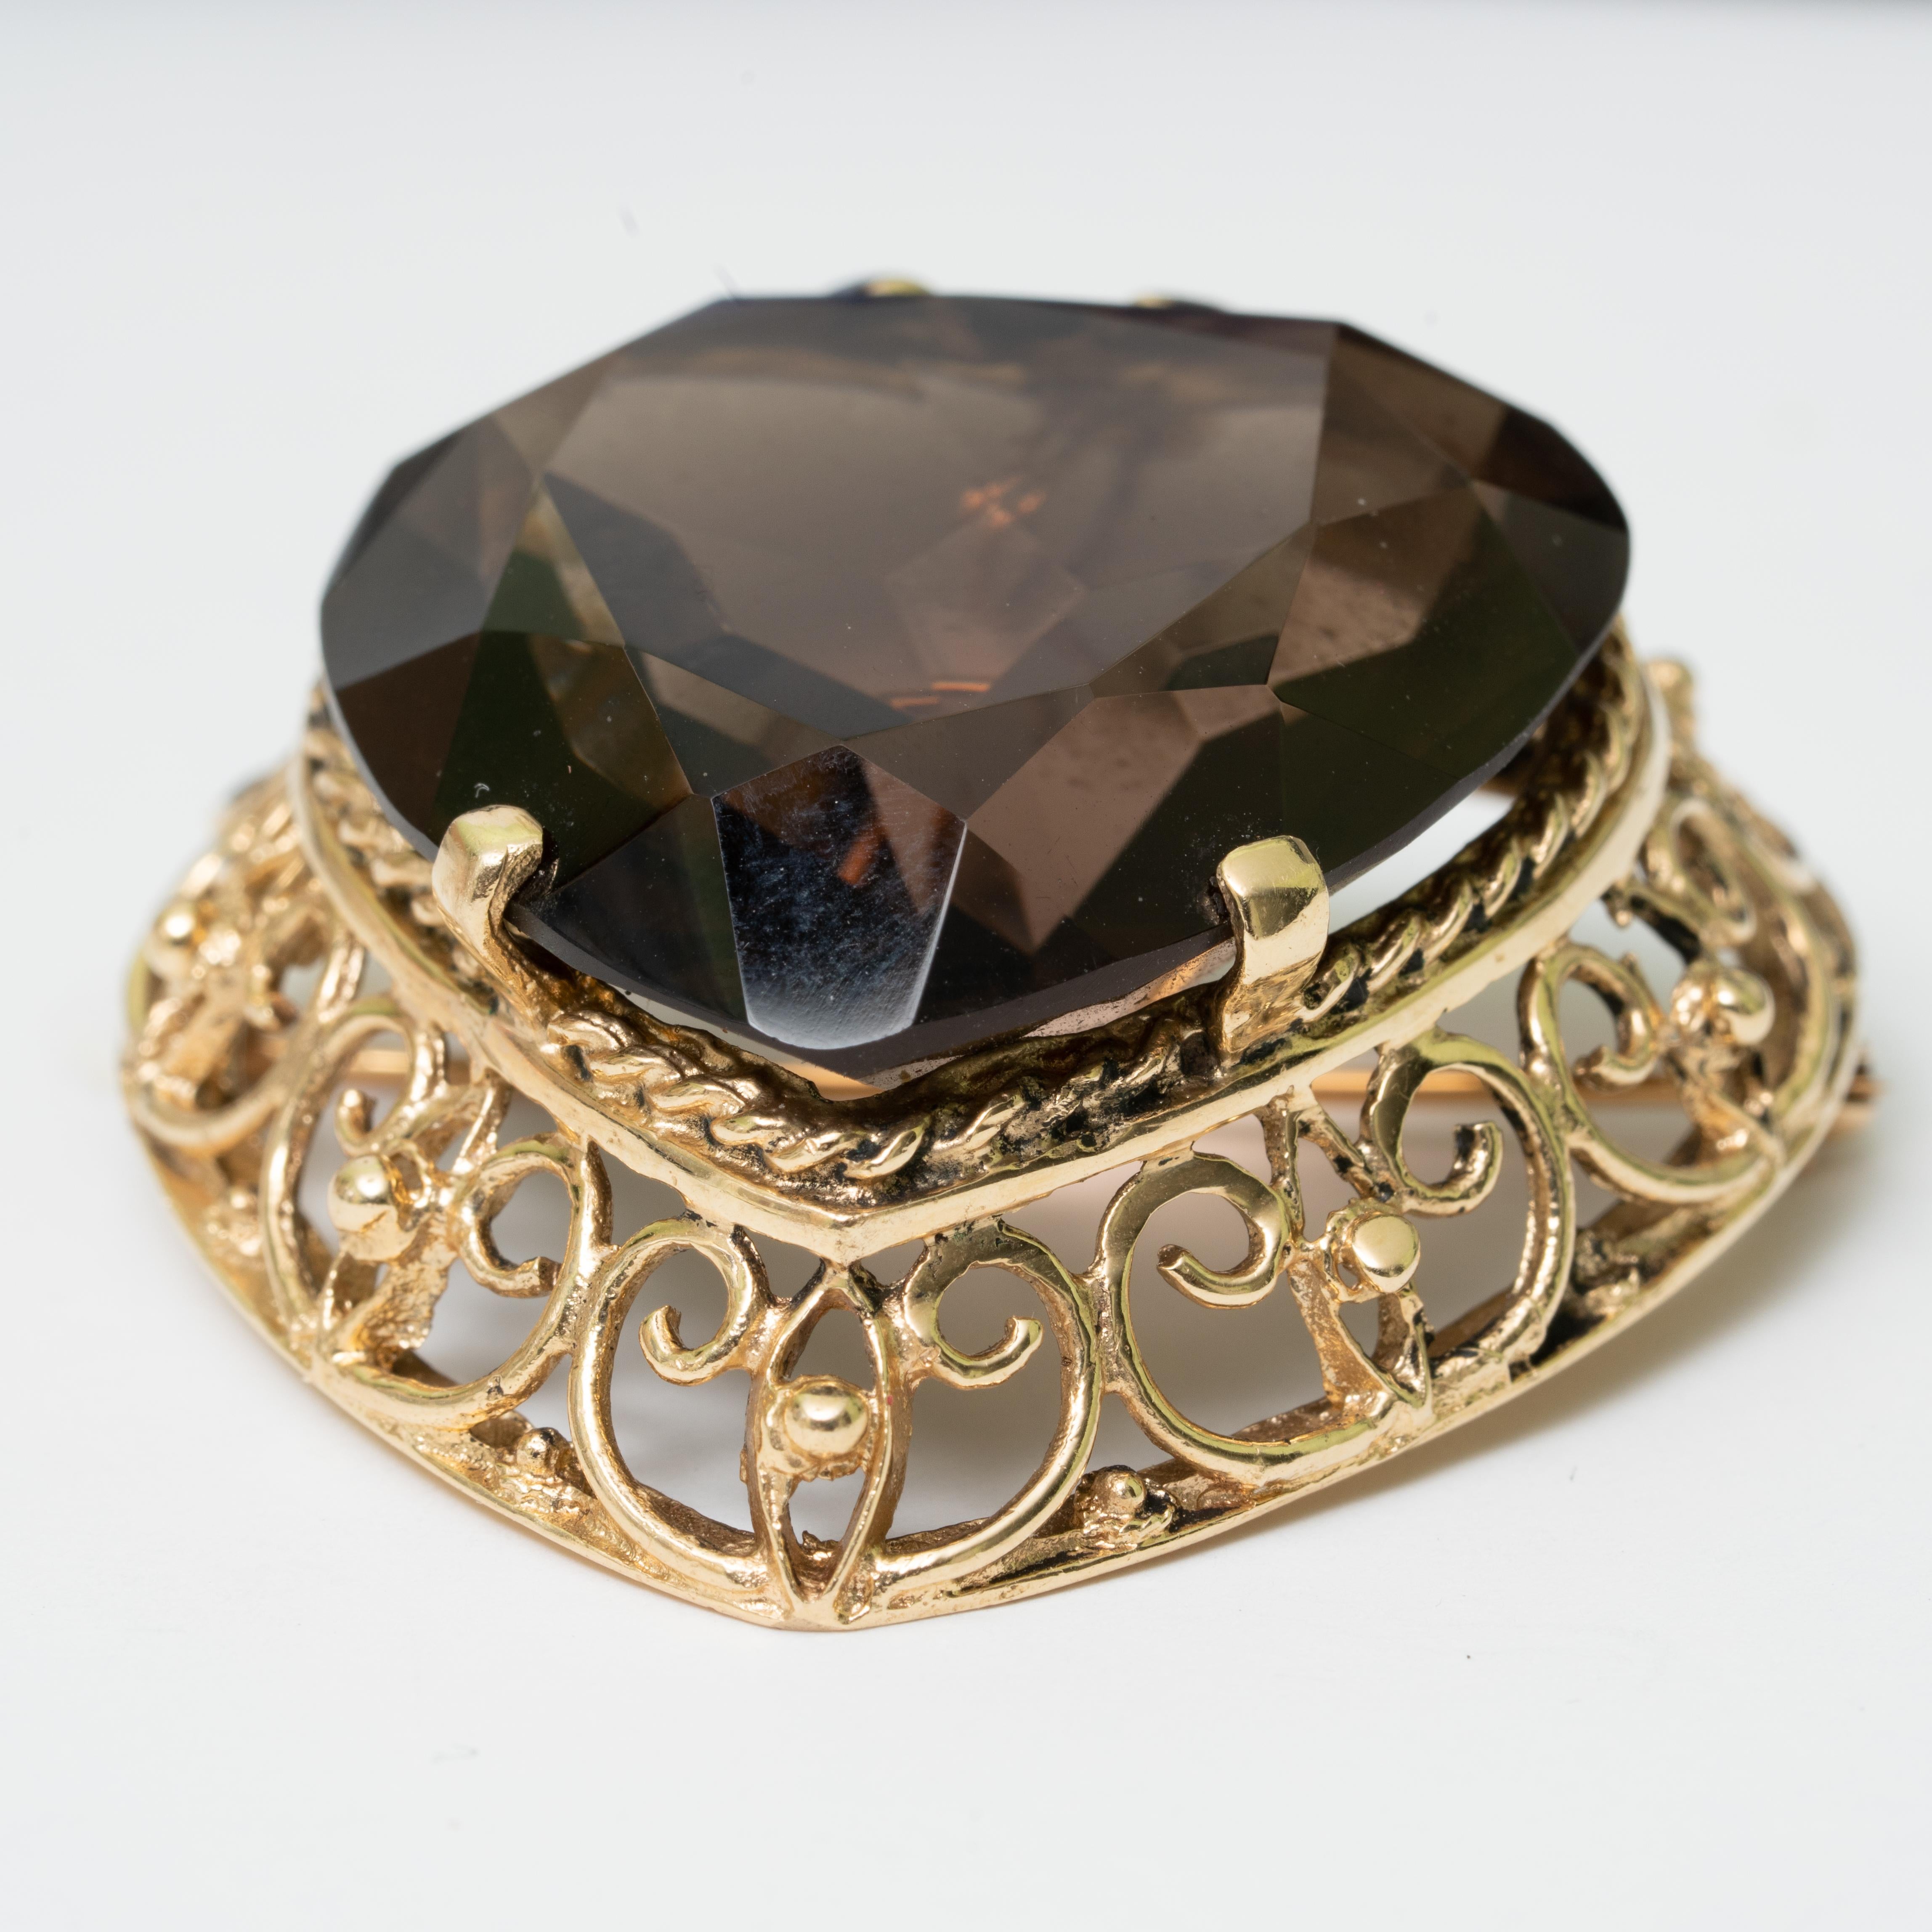 14k gold heart shaped smokey quartz brooch or pendant. Weighs 17.9 dwts. 42.00 x 40.00 x 24.20mm 